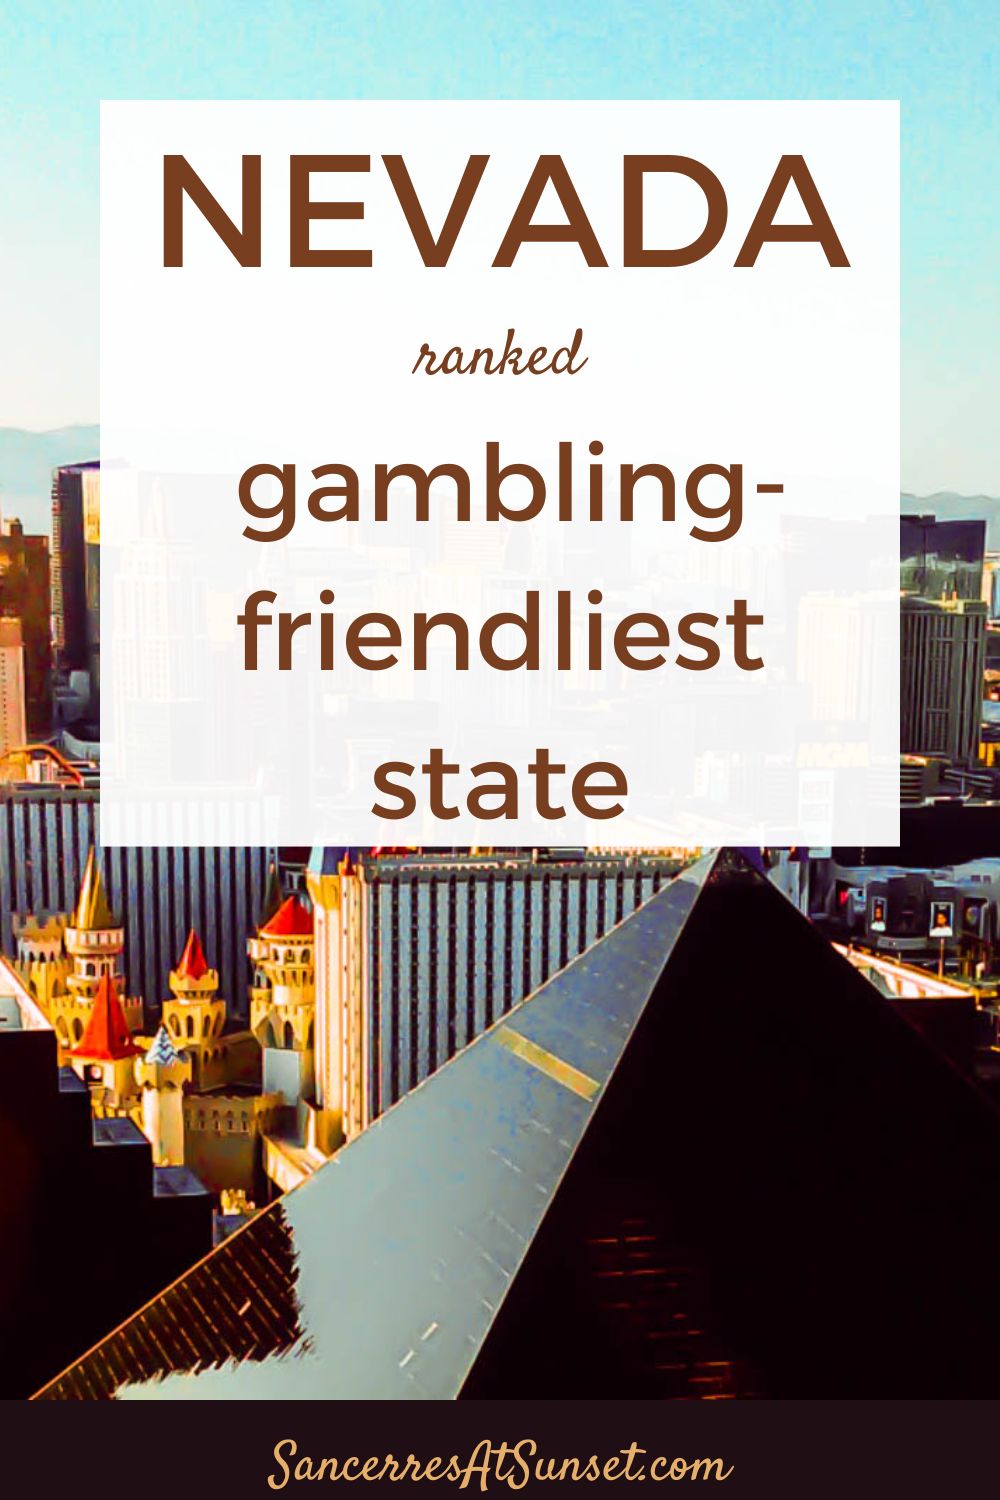 Nevada Ranked Gambling-Friendliest State